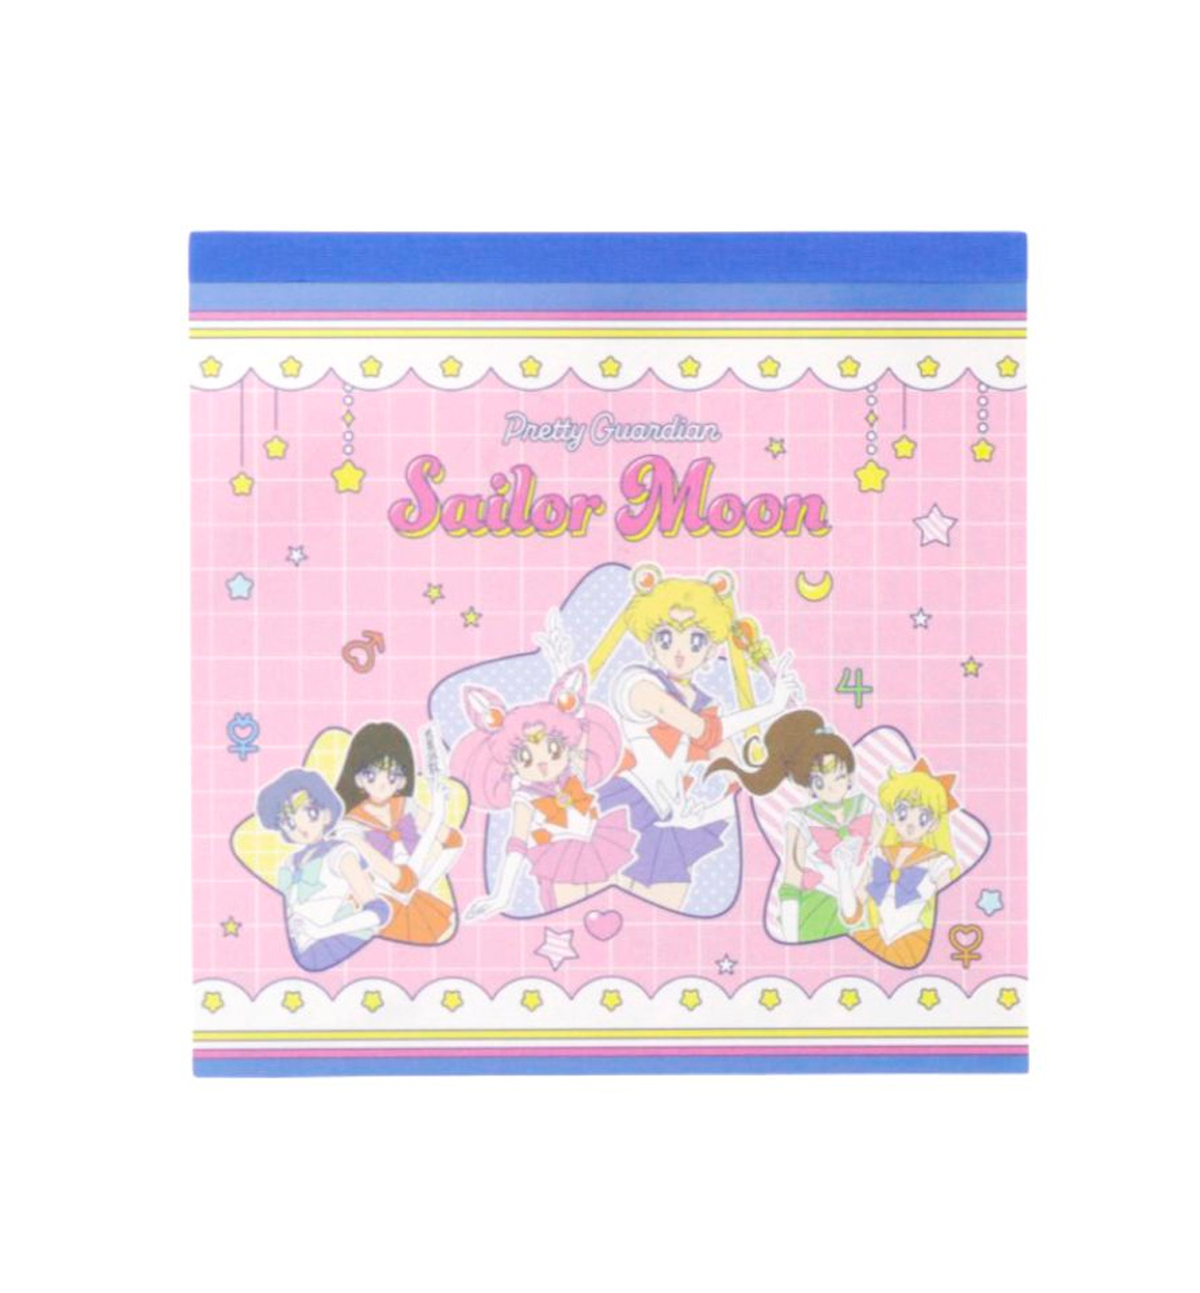 Sailor Moon Square Memopad [Pink A]